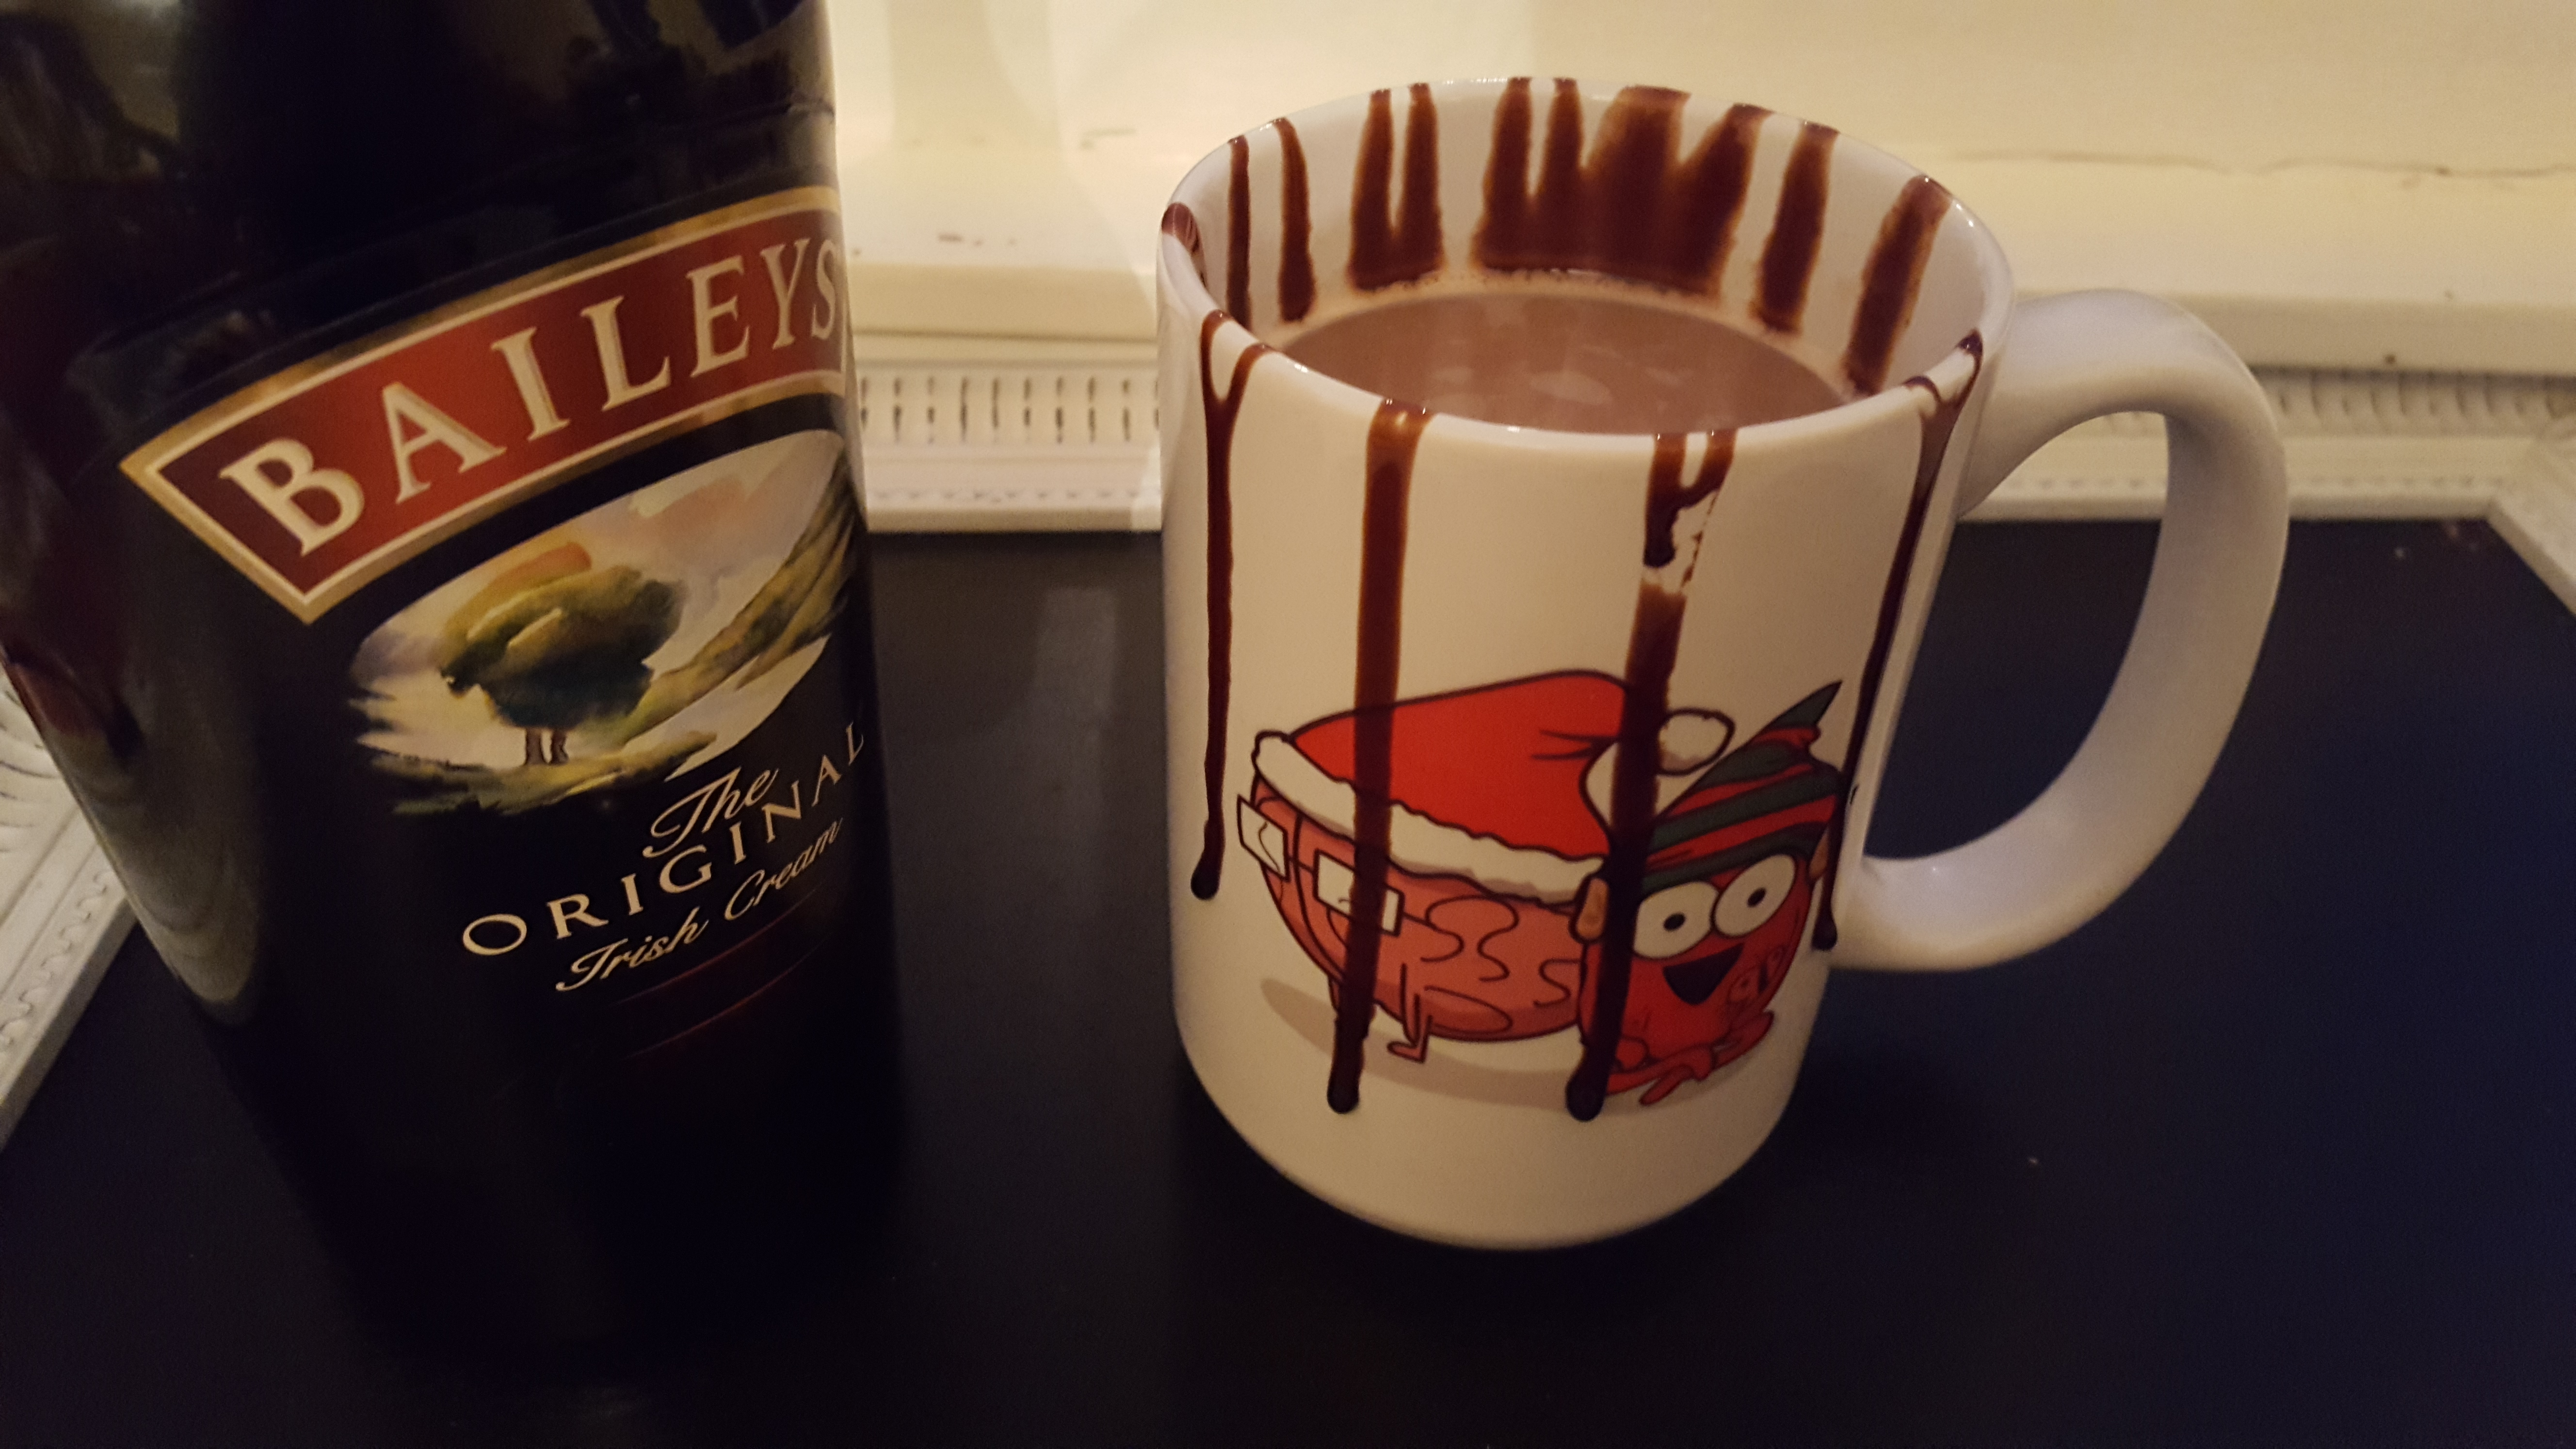 Baileys Hot Chocolate 